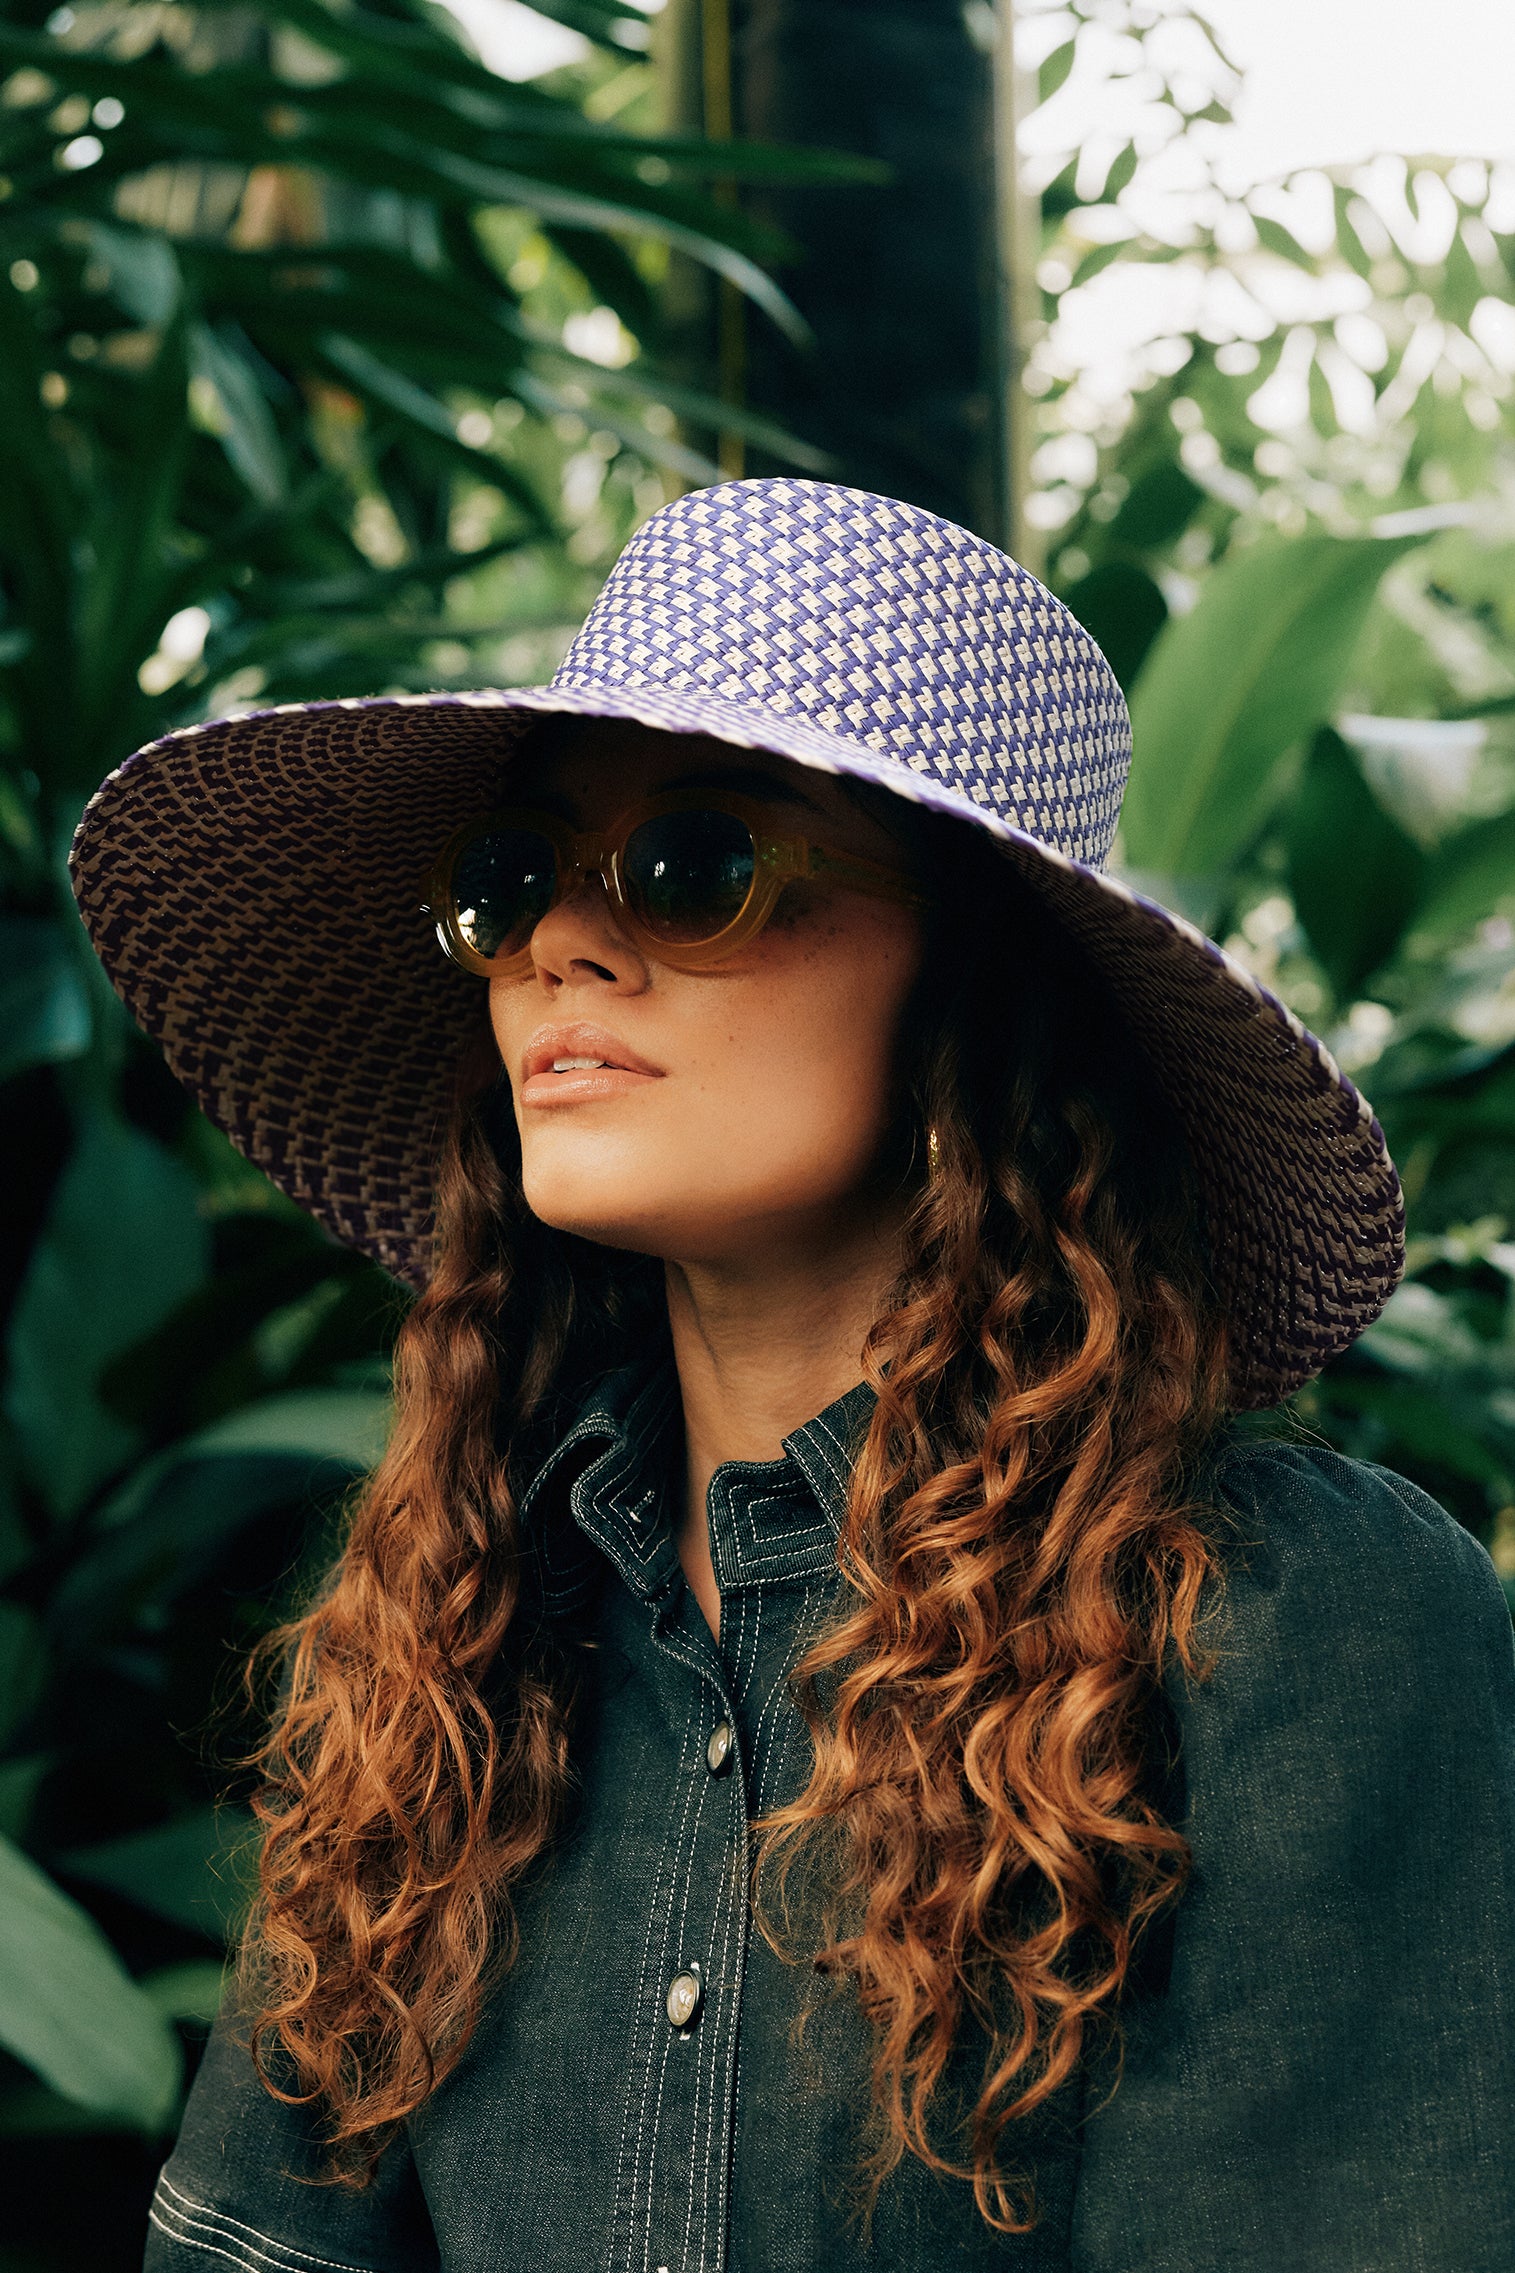 Salcombe Panama - Panamas, Straw and Sun Hats for Women - Lock & Co. Hatters London UK